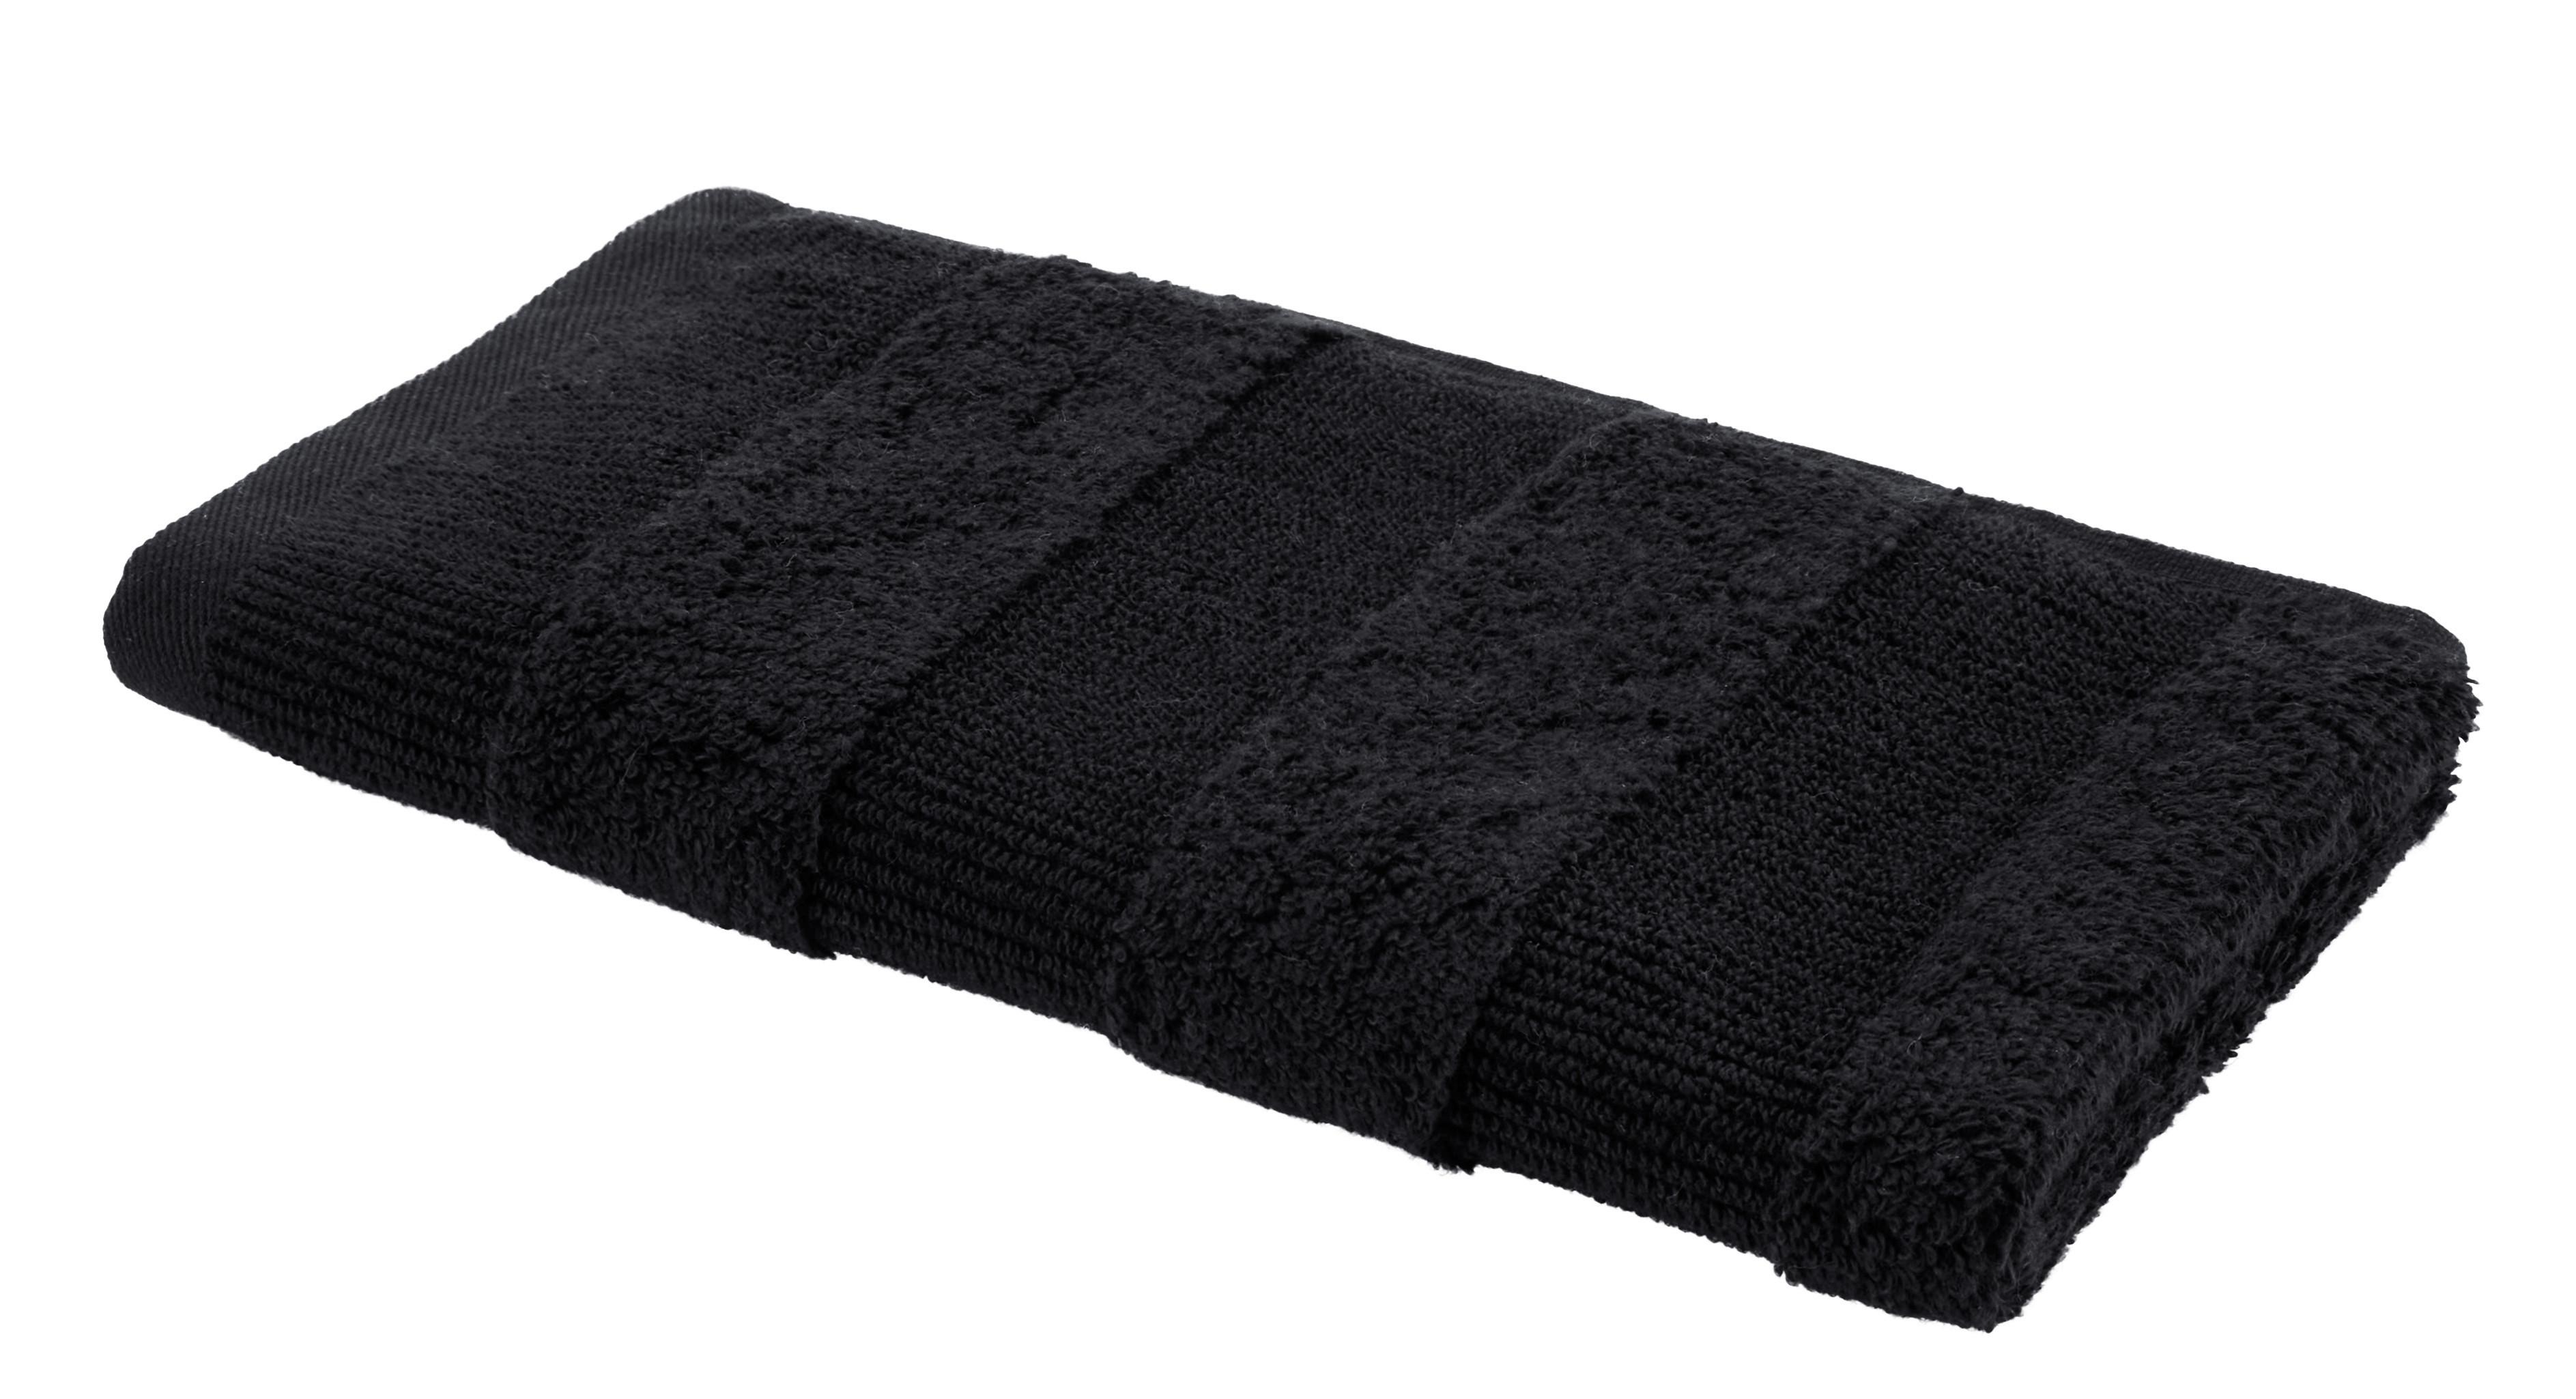 Brisača Chris - črna, tekstil (30/50cm) - Premium Living